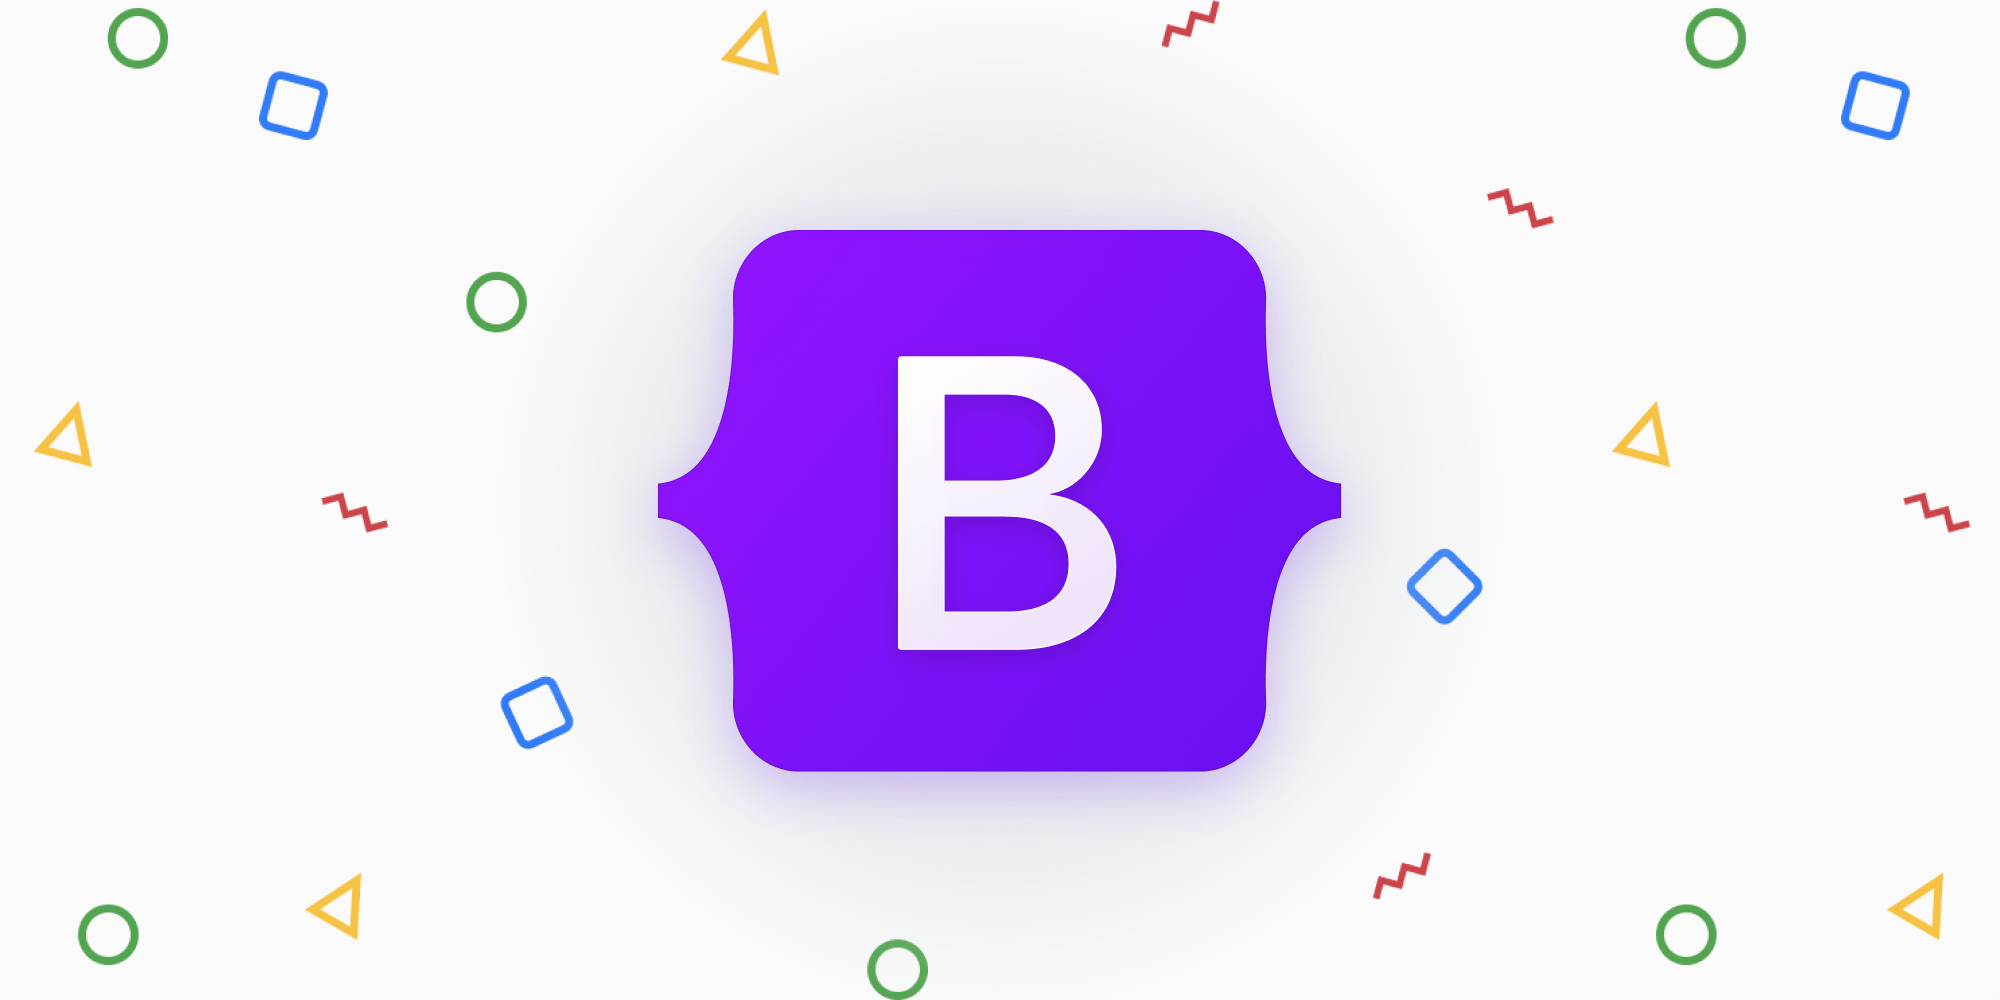 Bootstrap's purple logo